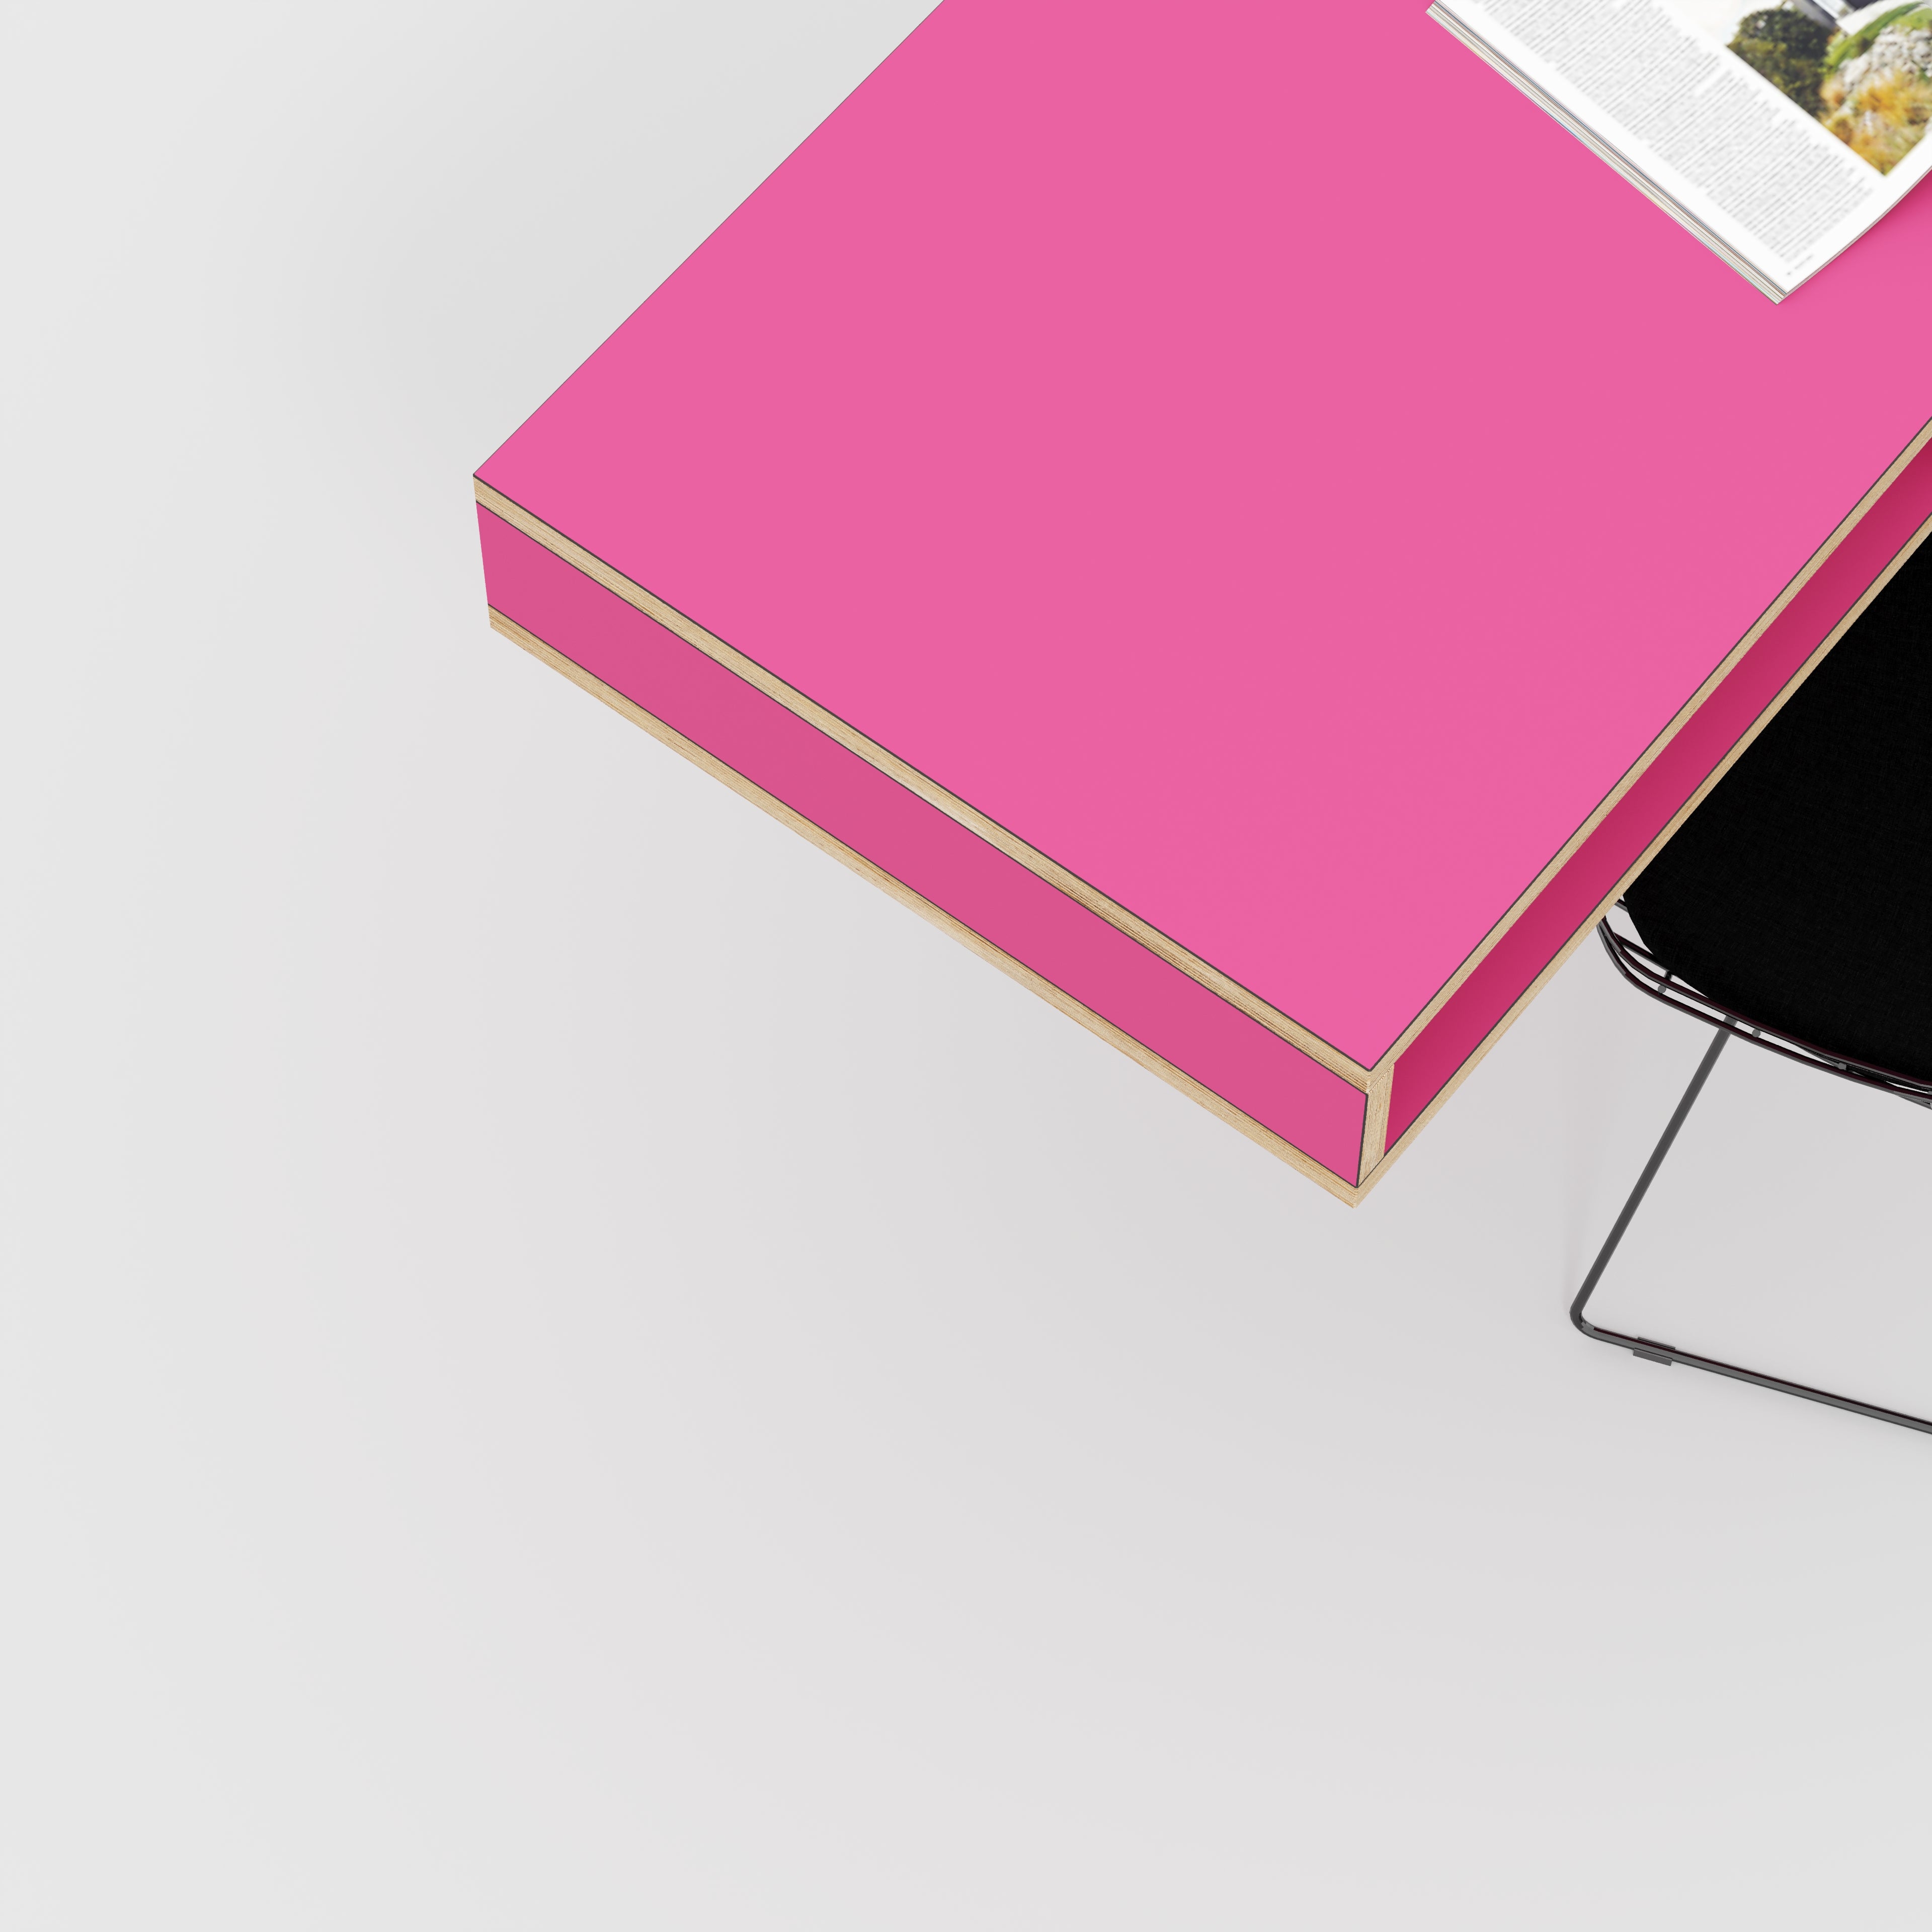 Plywood Desktop with Storage - Formica Juicy Pink - 1200(w) x 600(d) x 150(h)